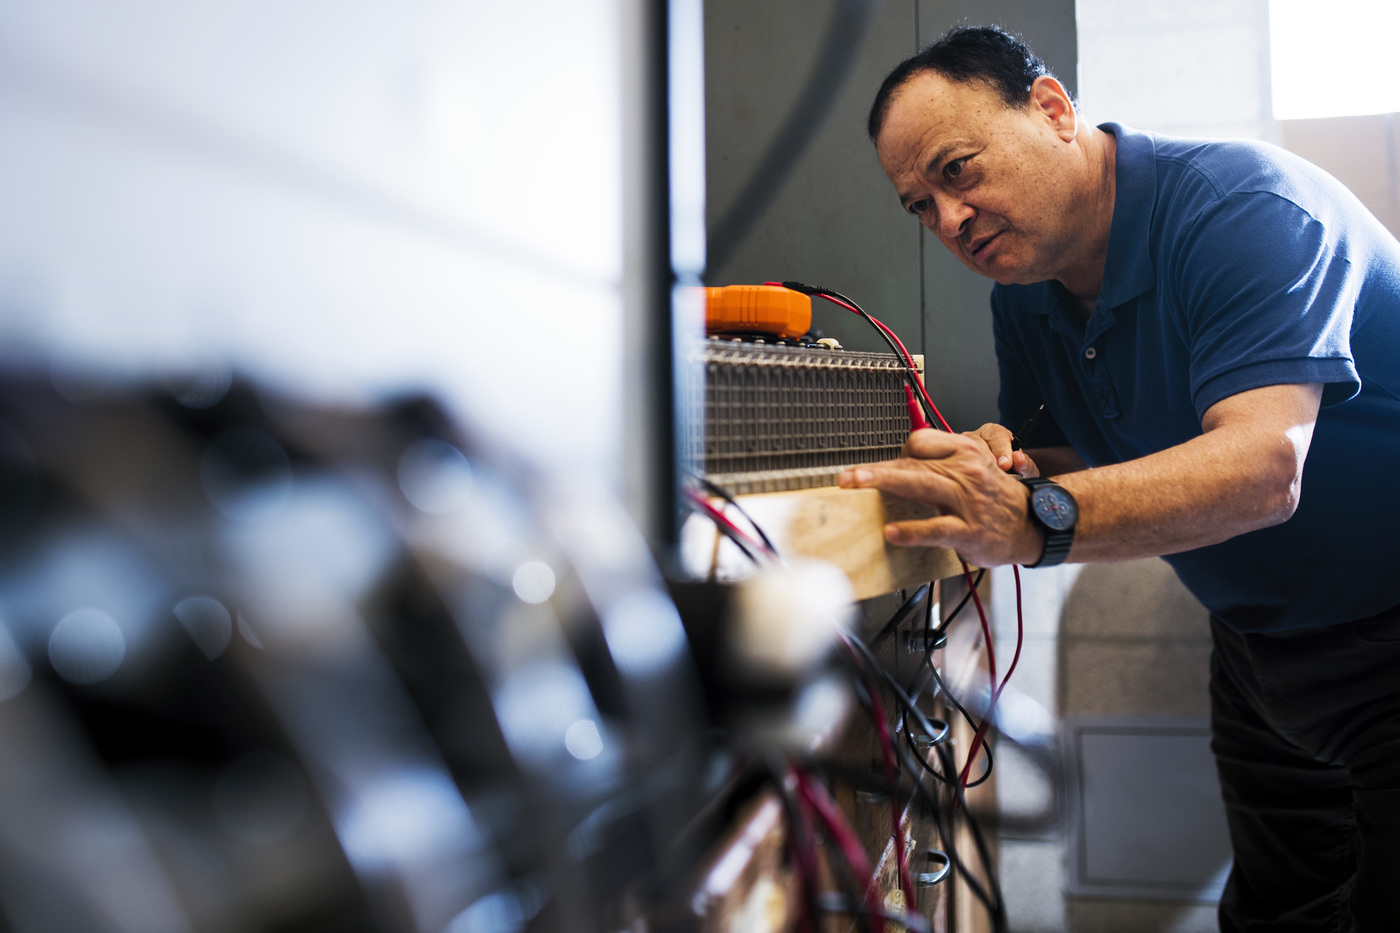 Eugene Smotkin evaluating a large, orange battery's performance after hooking it up to a larger machine